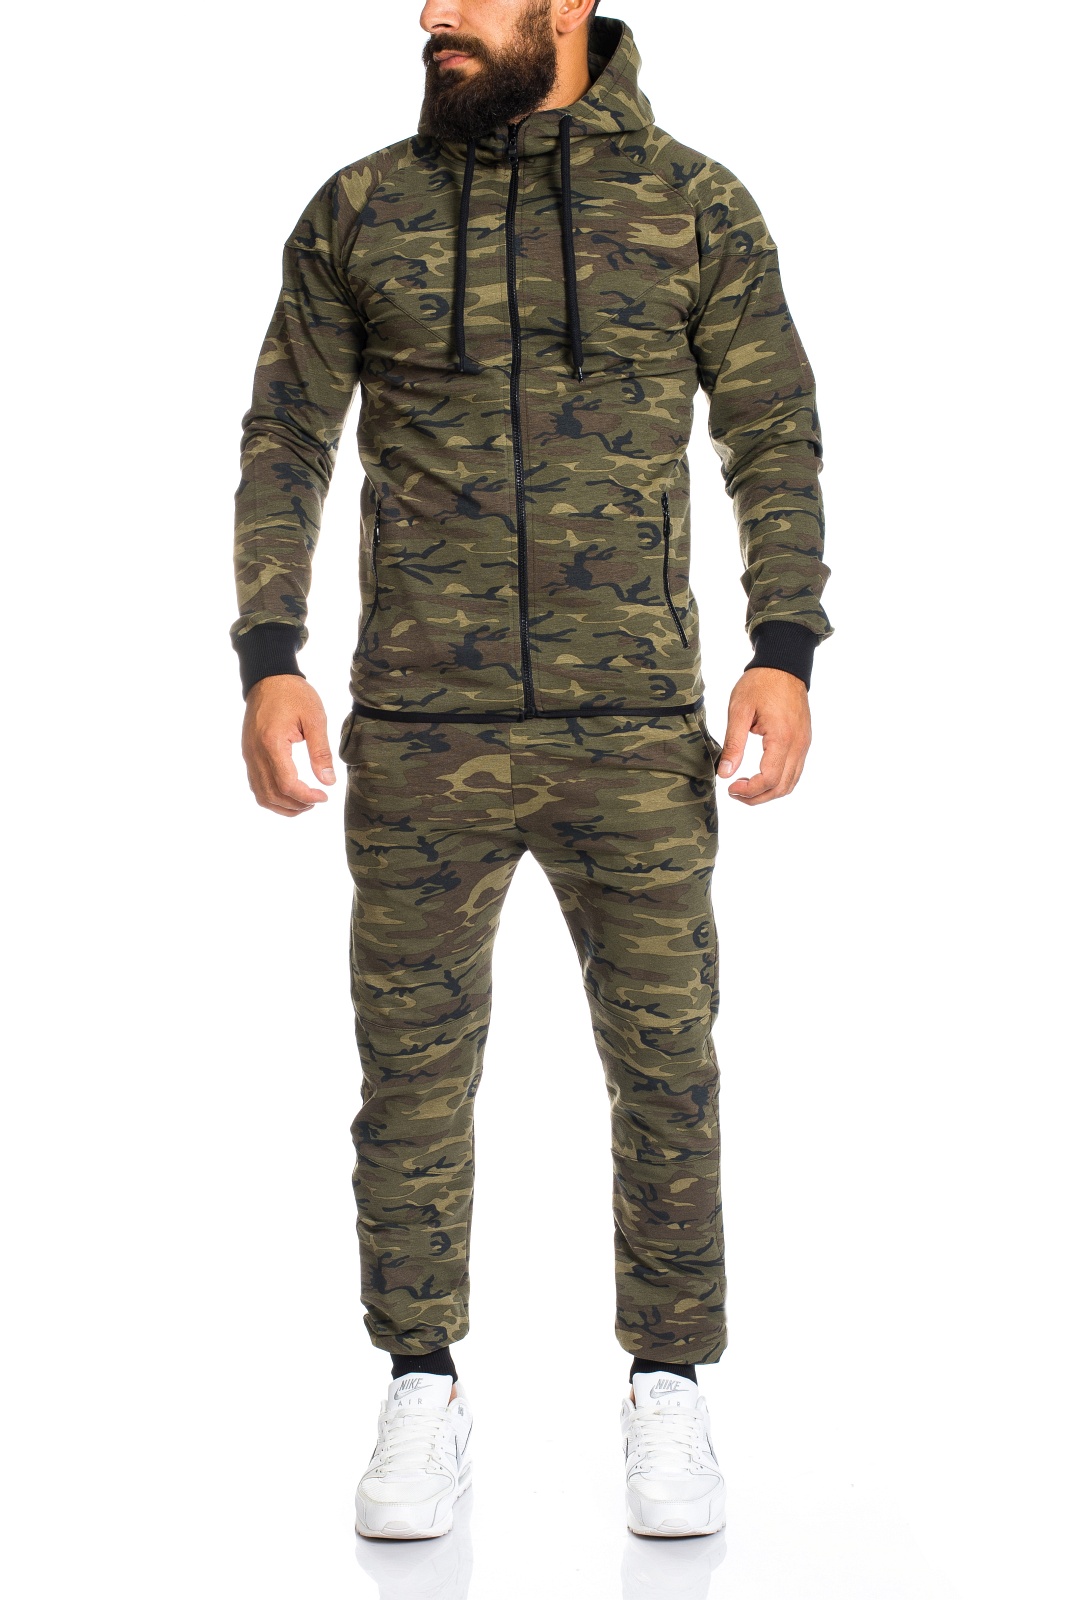 Men's camouflage army jogging suit jogging pants jacket trackies ...